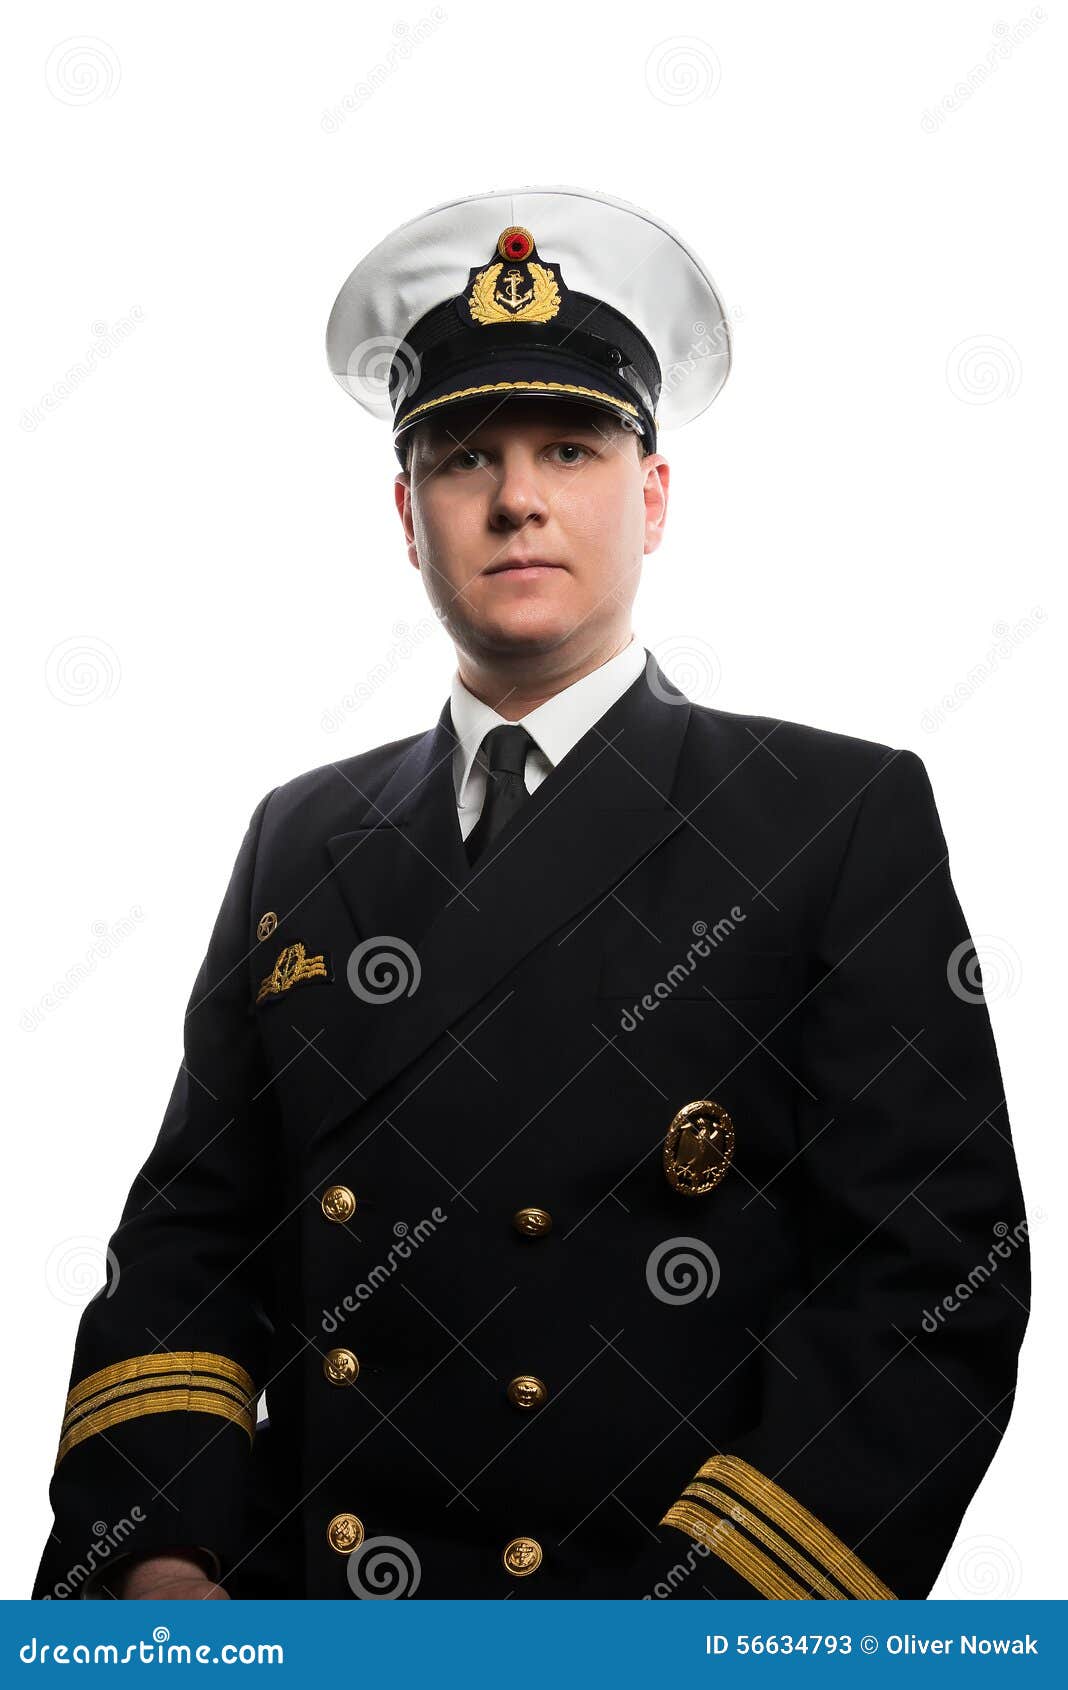 lieutenant commander